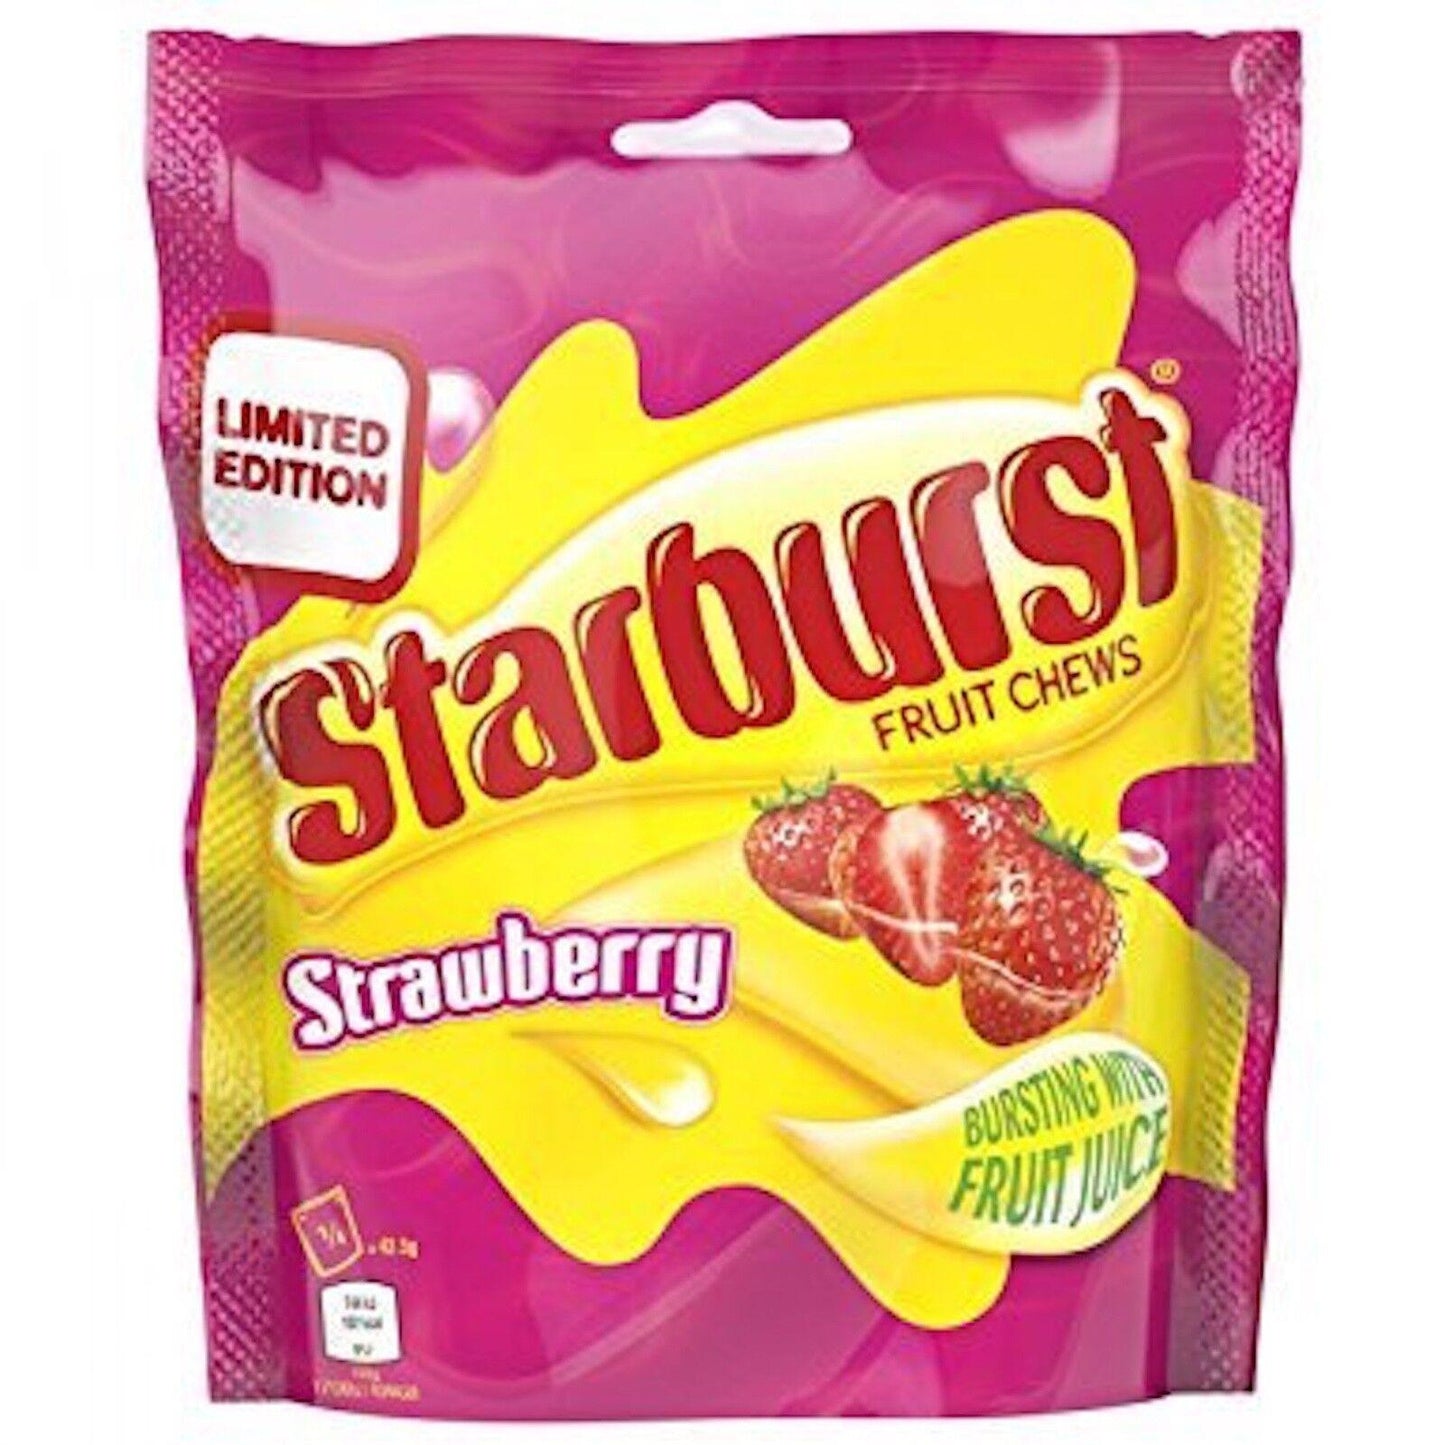 Starburst Strawberry Fruit Chews Bag 150G - Extreme Snacks